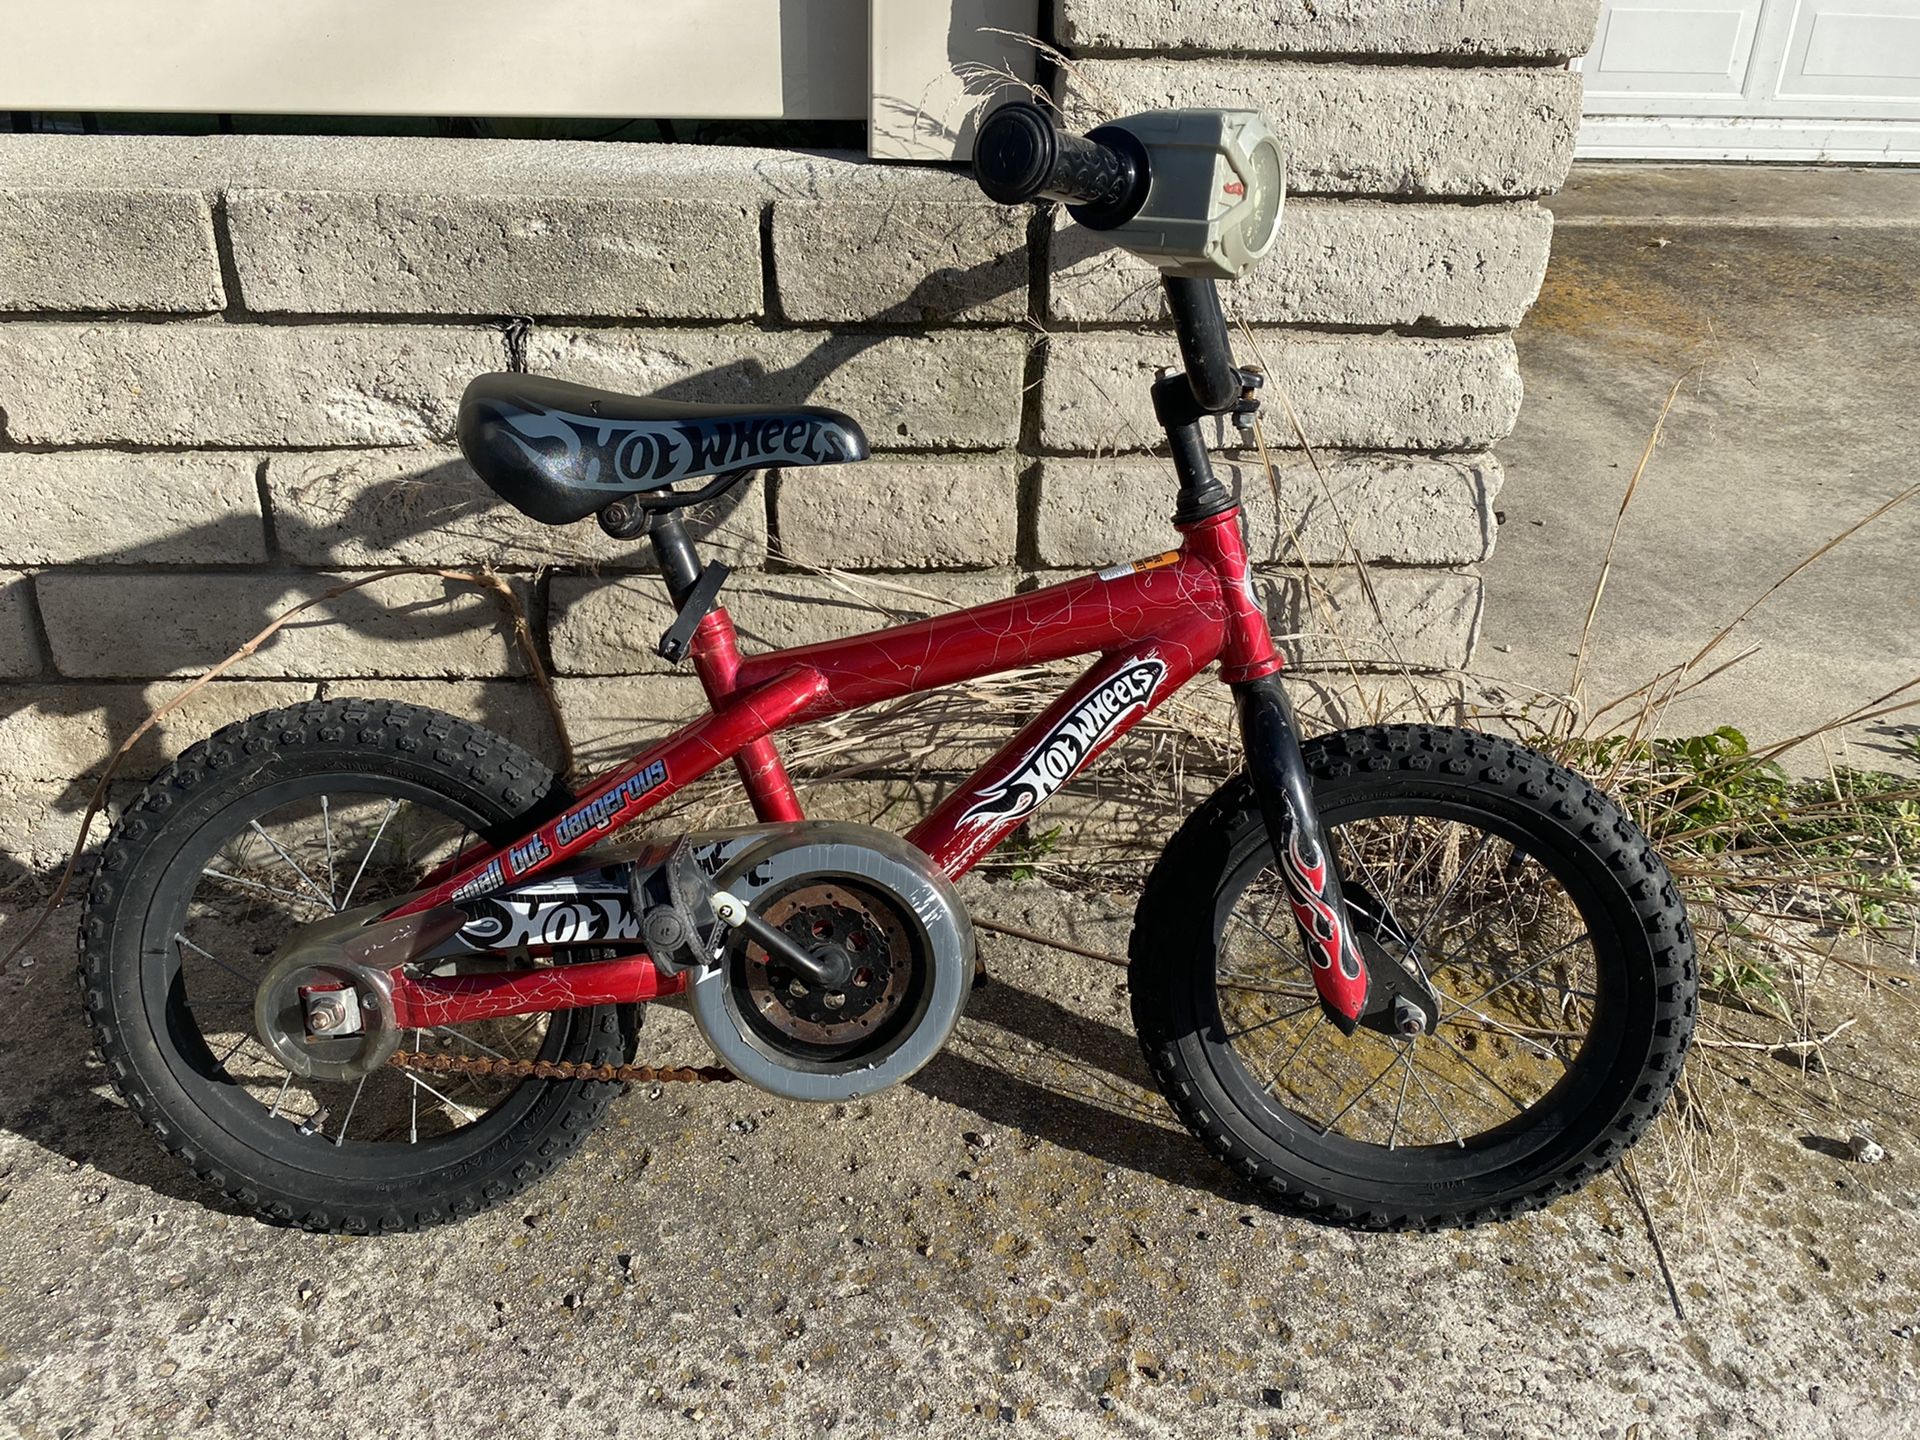 Kid Hotwheels racer bike $10